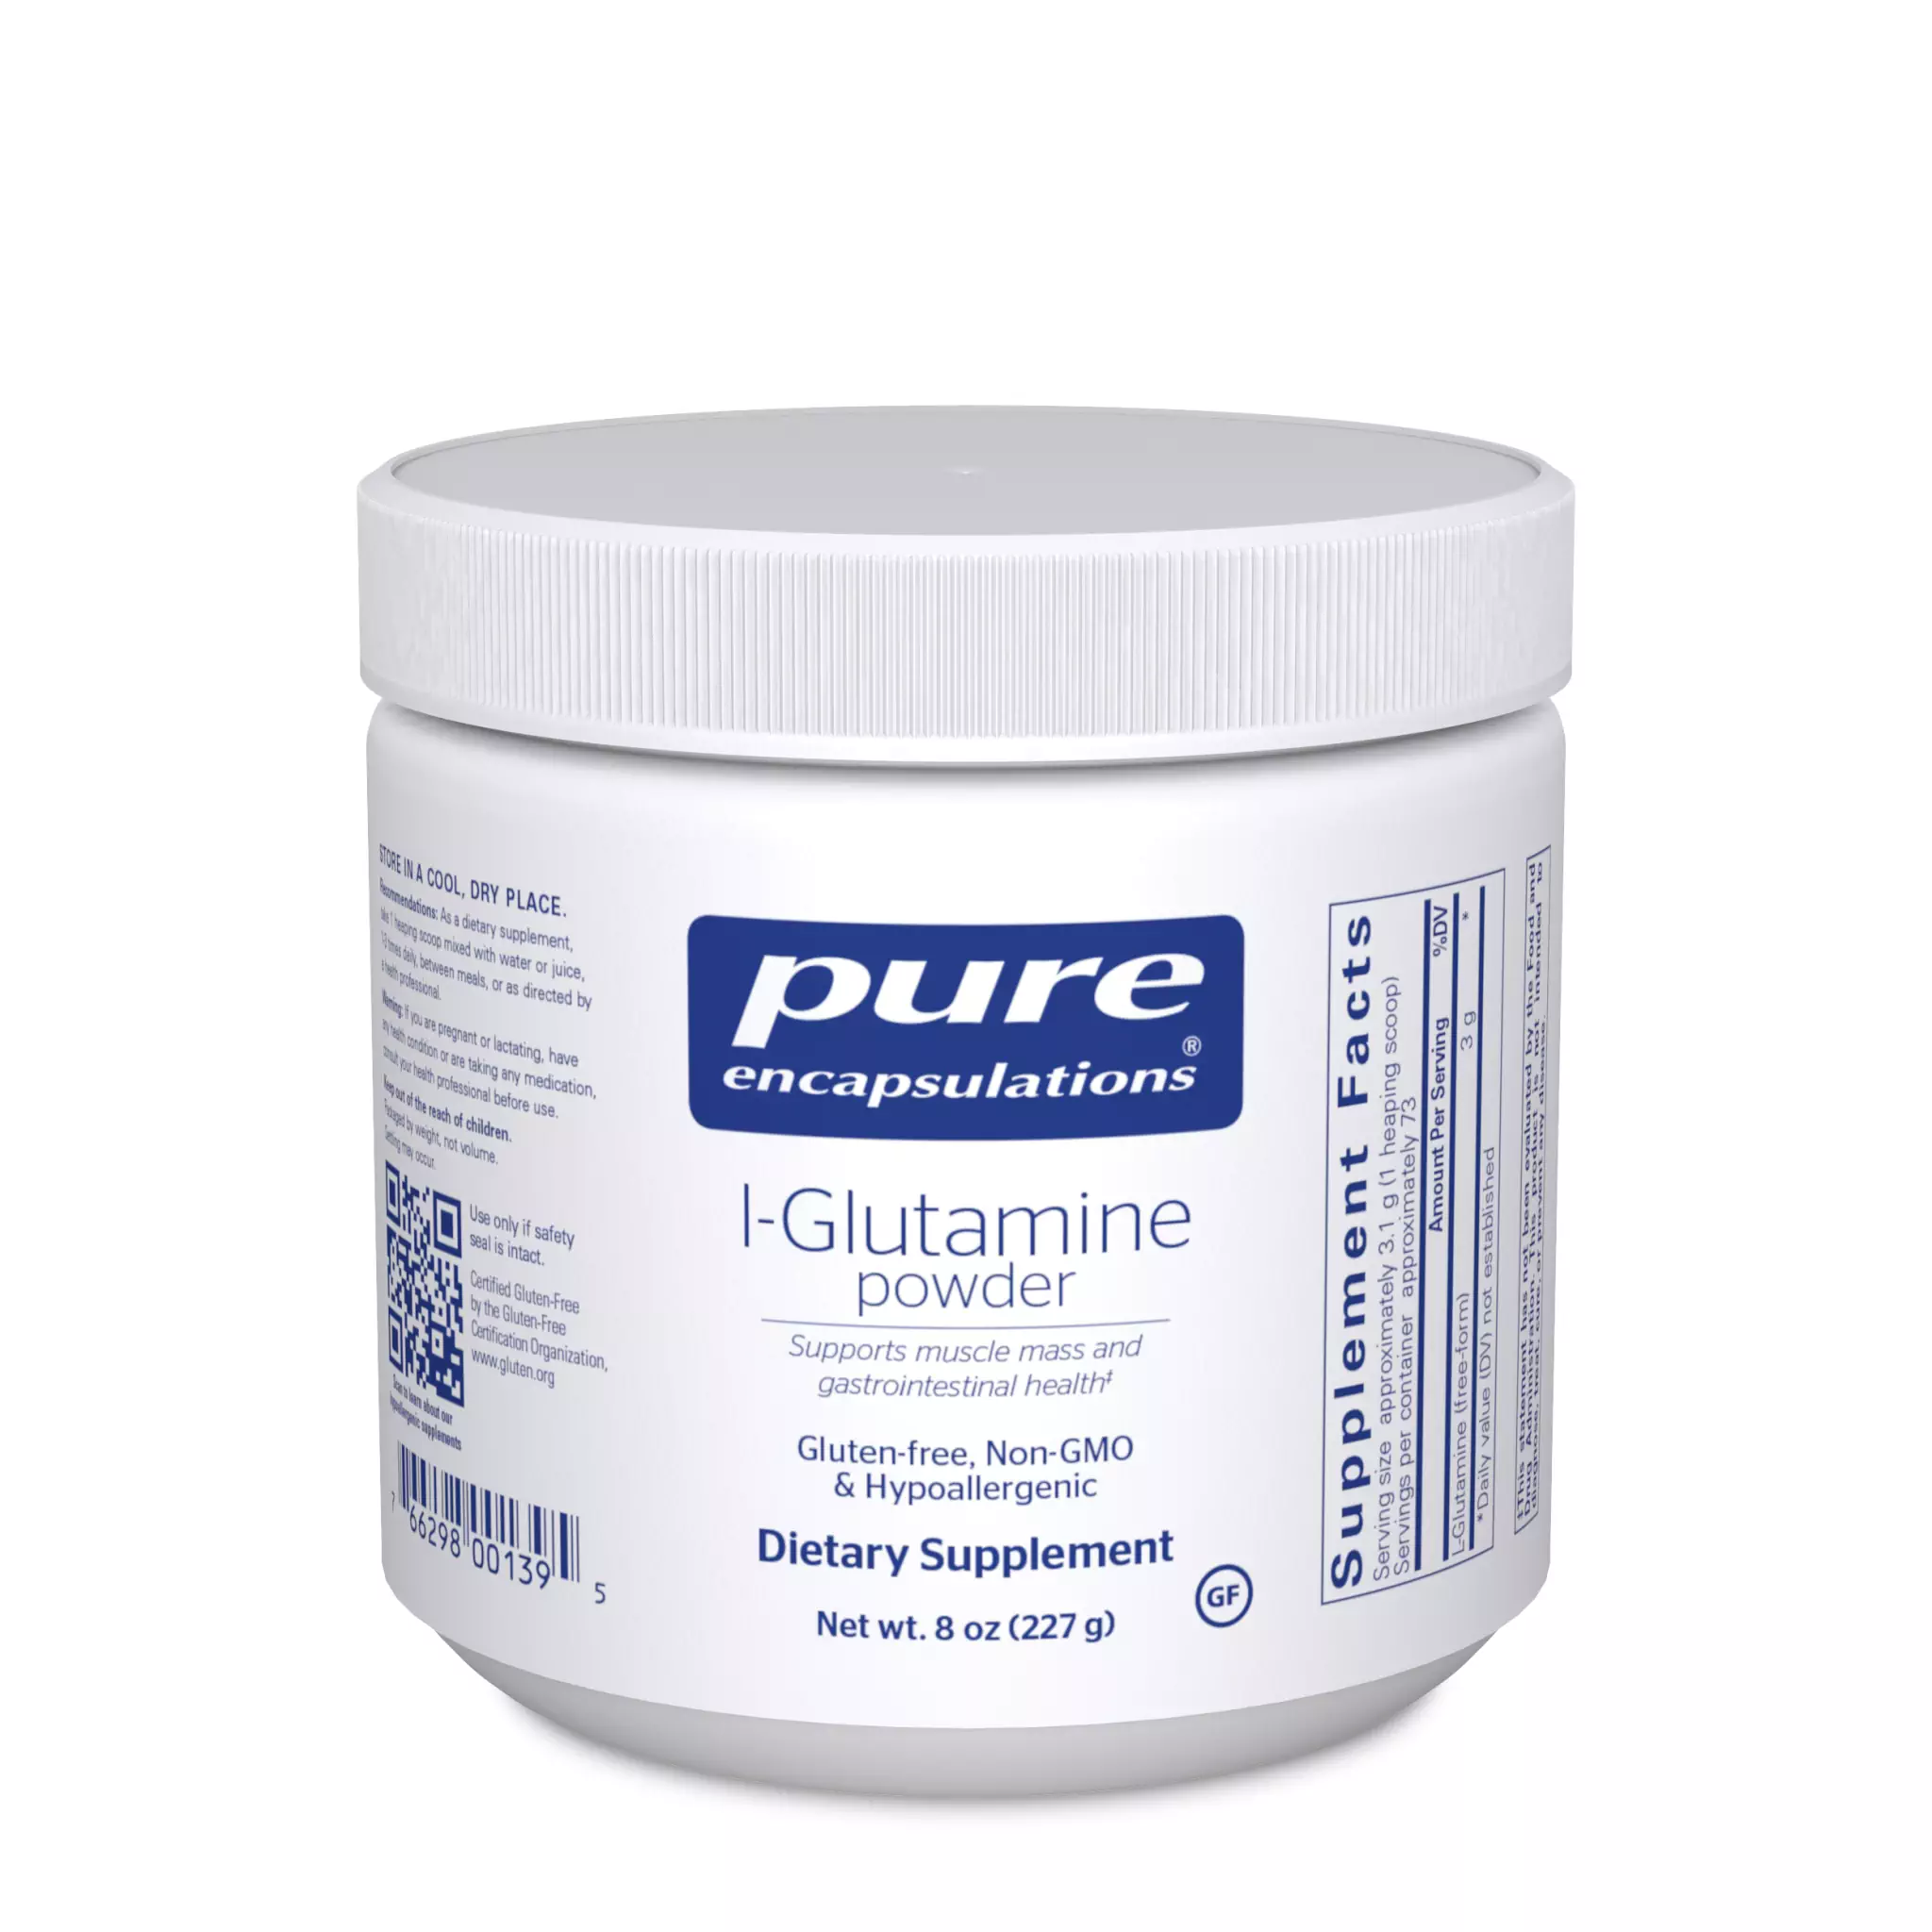 Pure Encapsulations - Glutamine powder 227 Grams